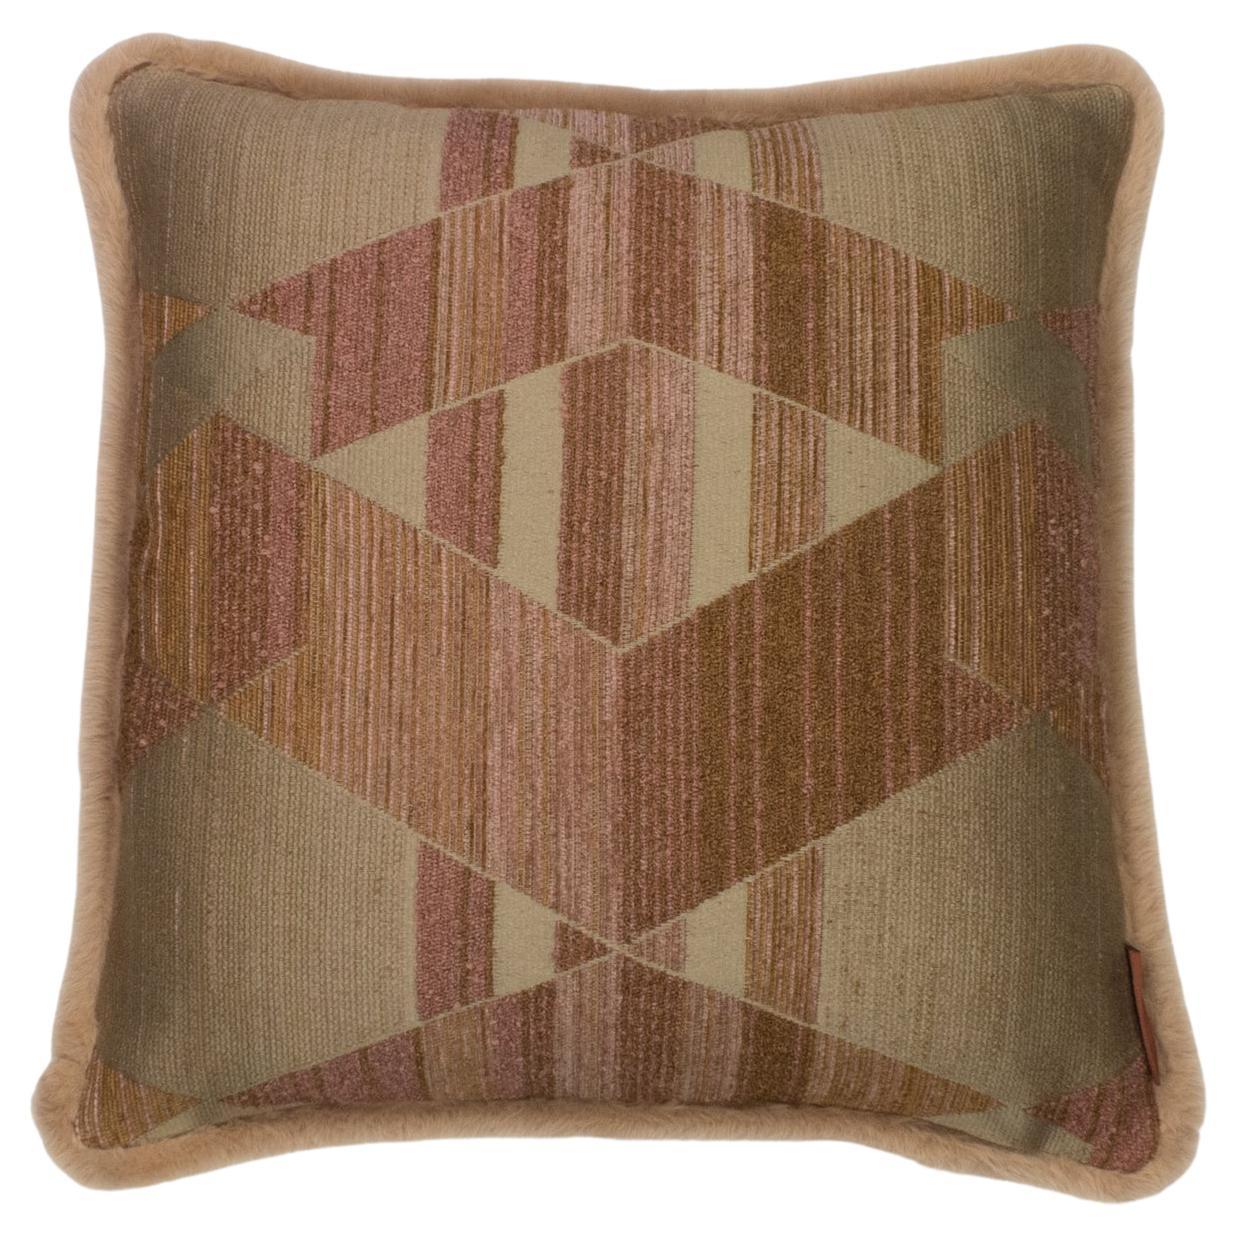 Cushion / Pillow Pattern Supreme Coup De Foudre Rose by Evoution21